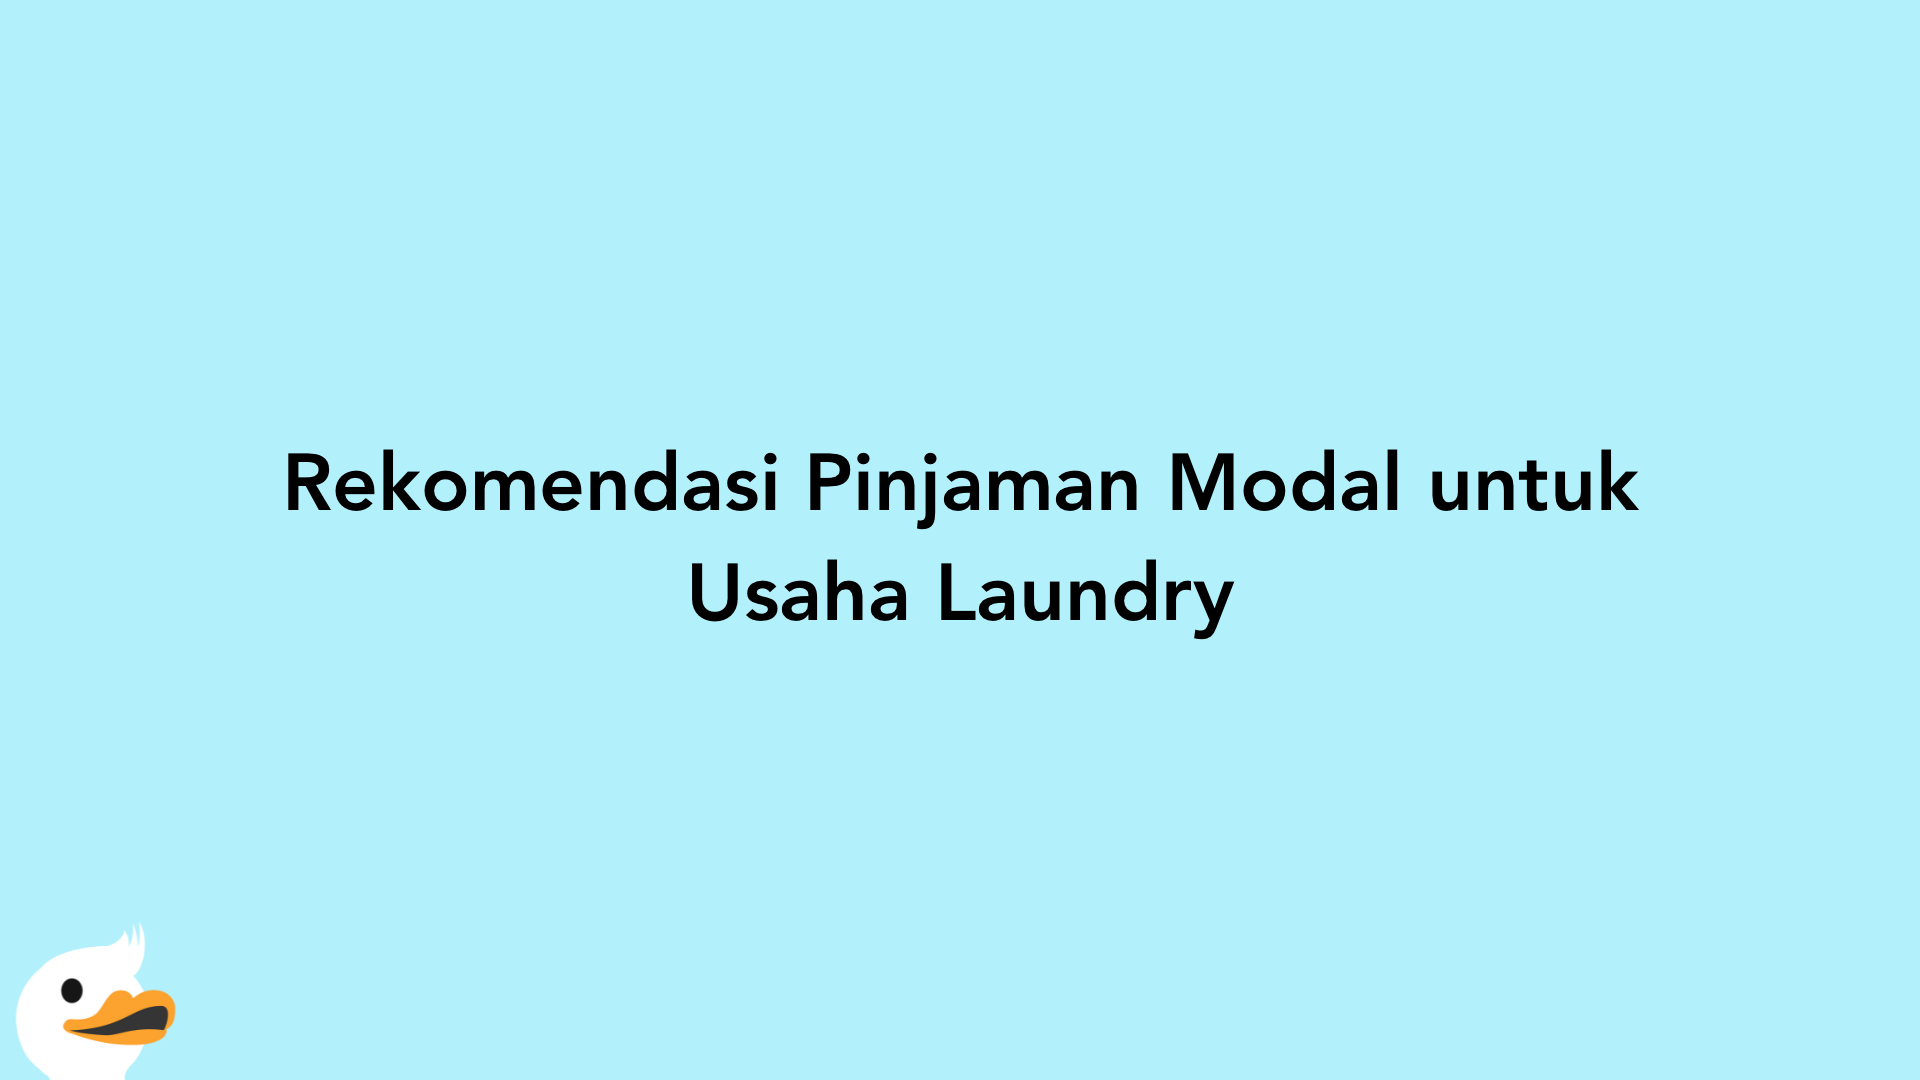 Rekomendasi Pinjaman Modal untuk Usaha Laundry